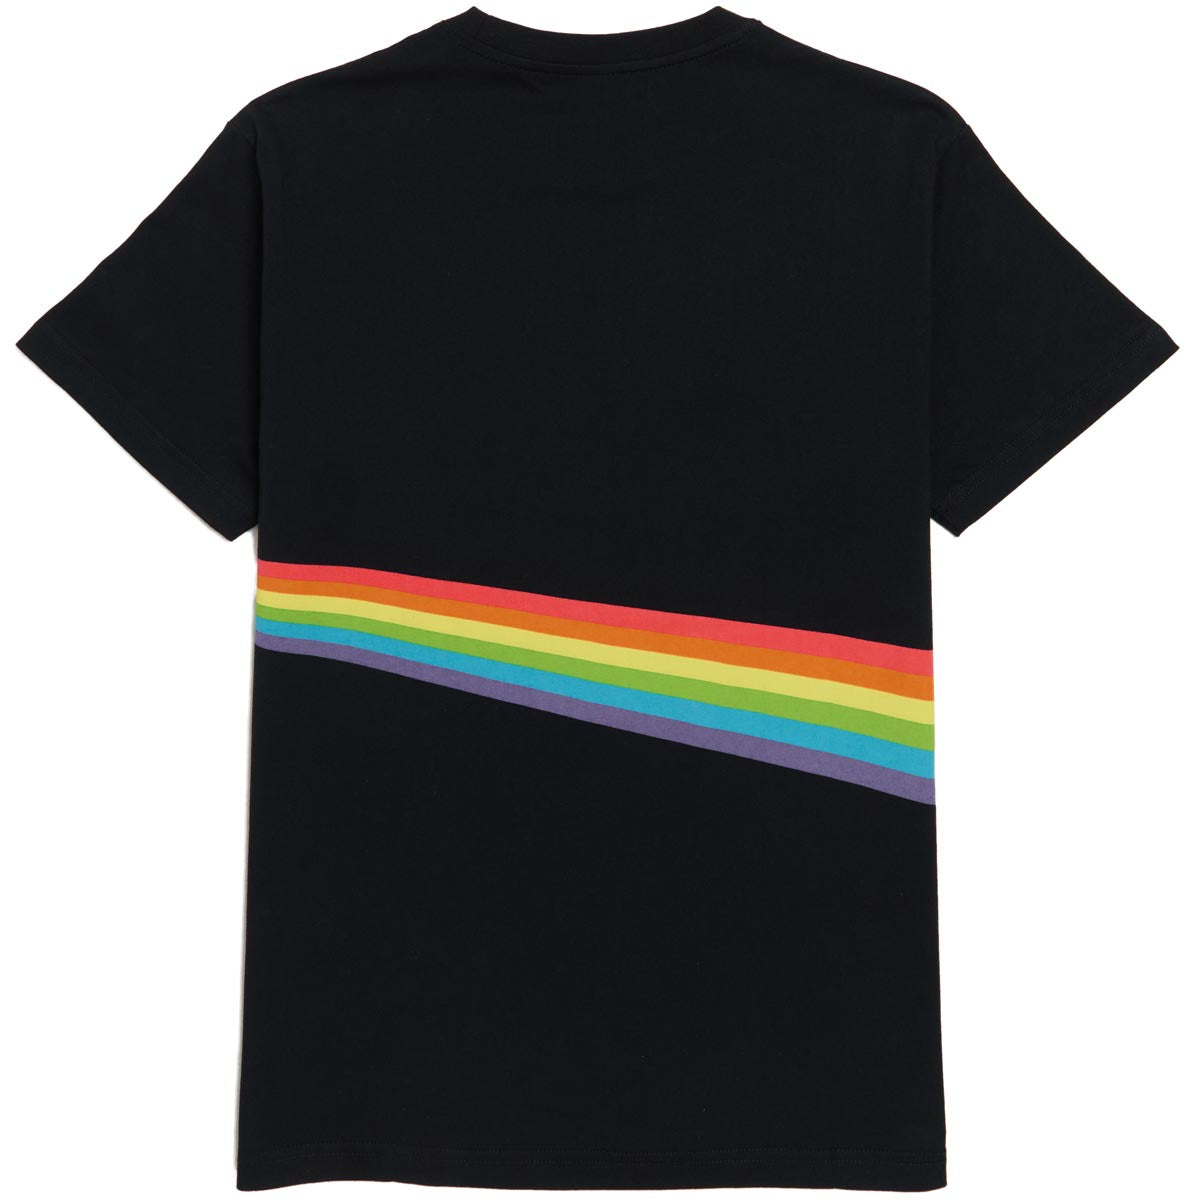 Habitat x Pink Floyd Dark Side of the Moon T-Shirt - Black image 2